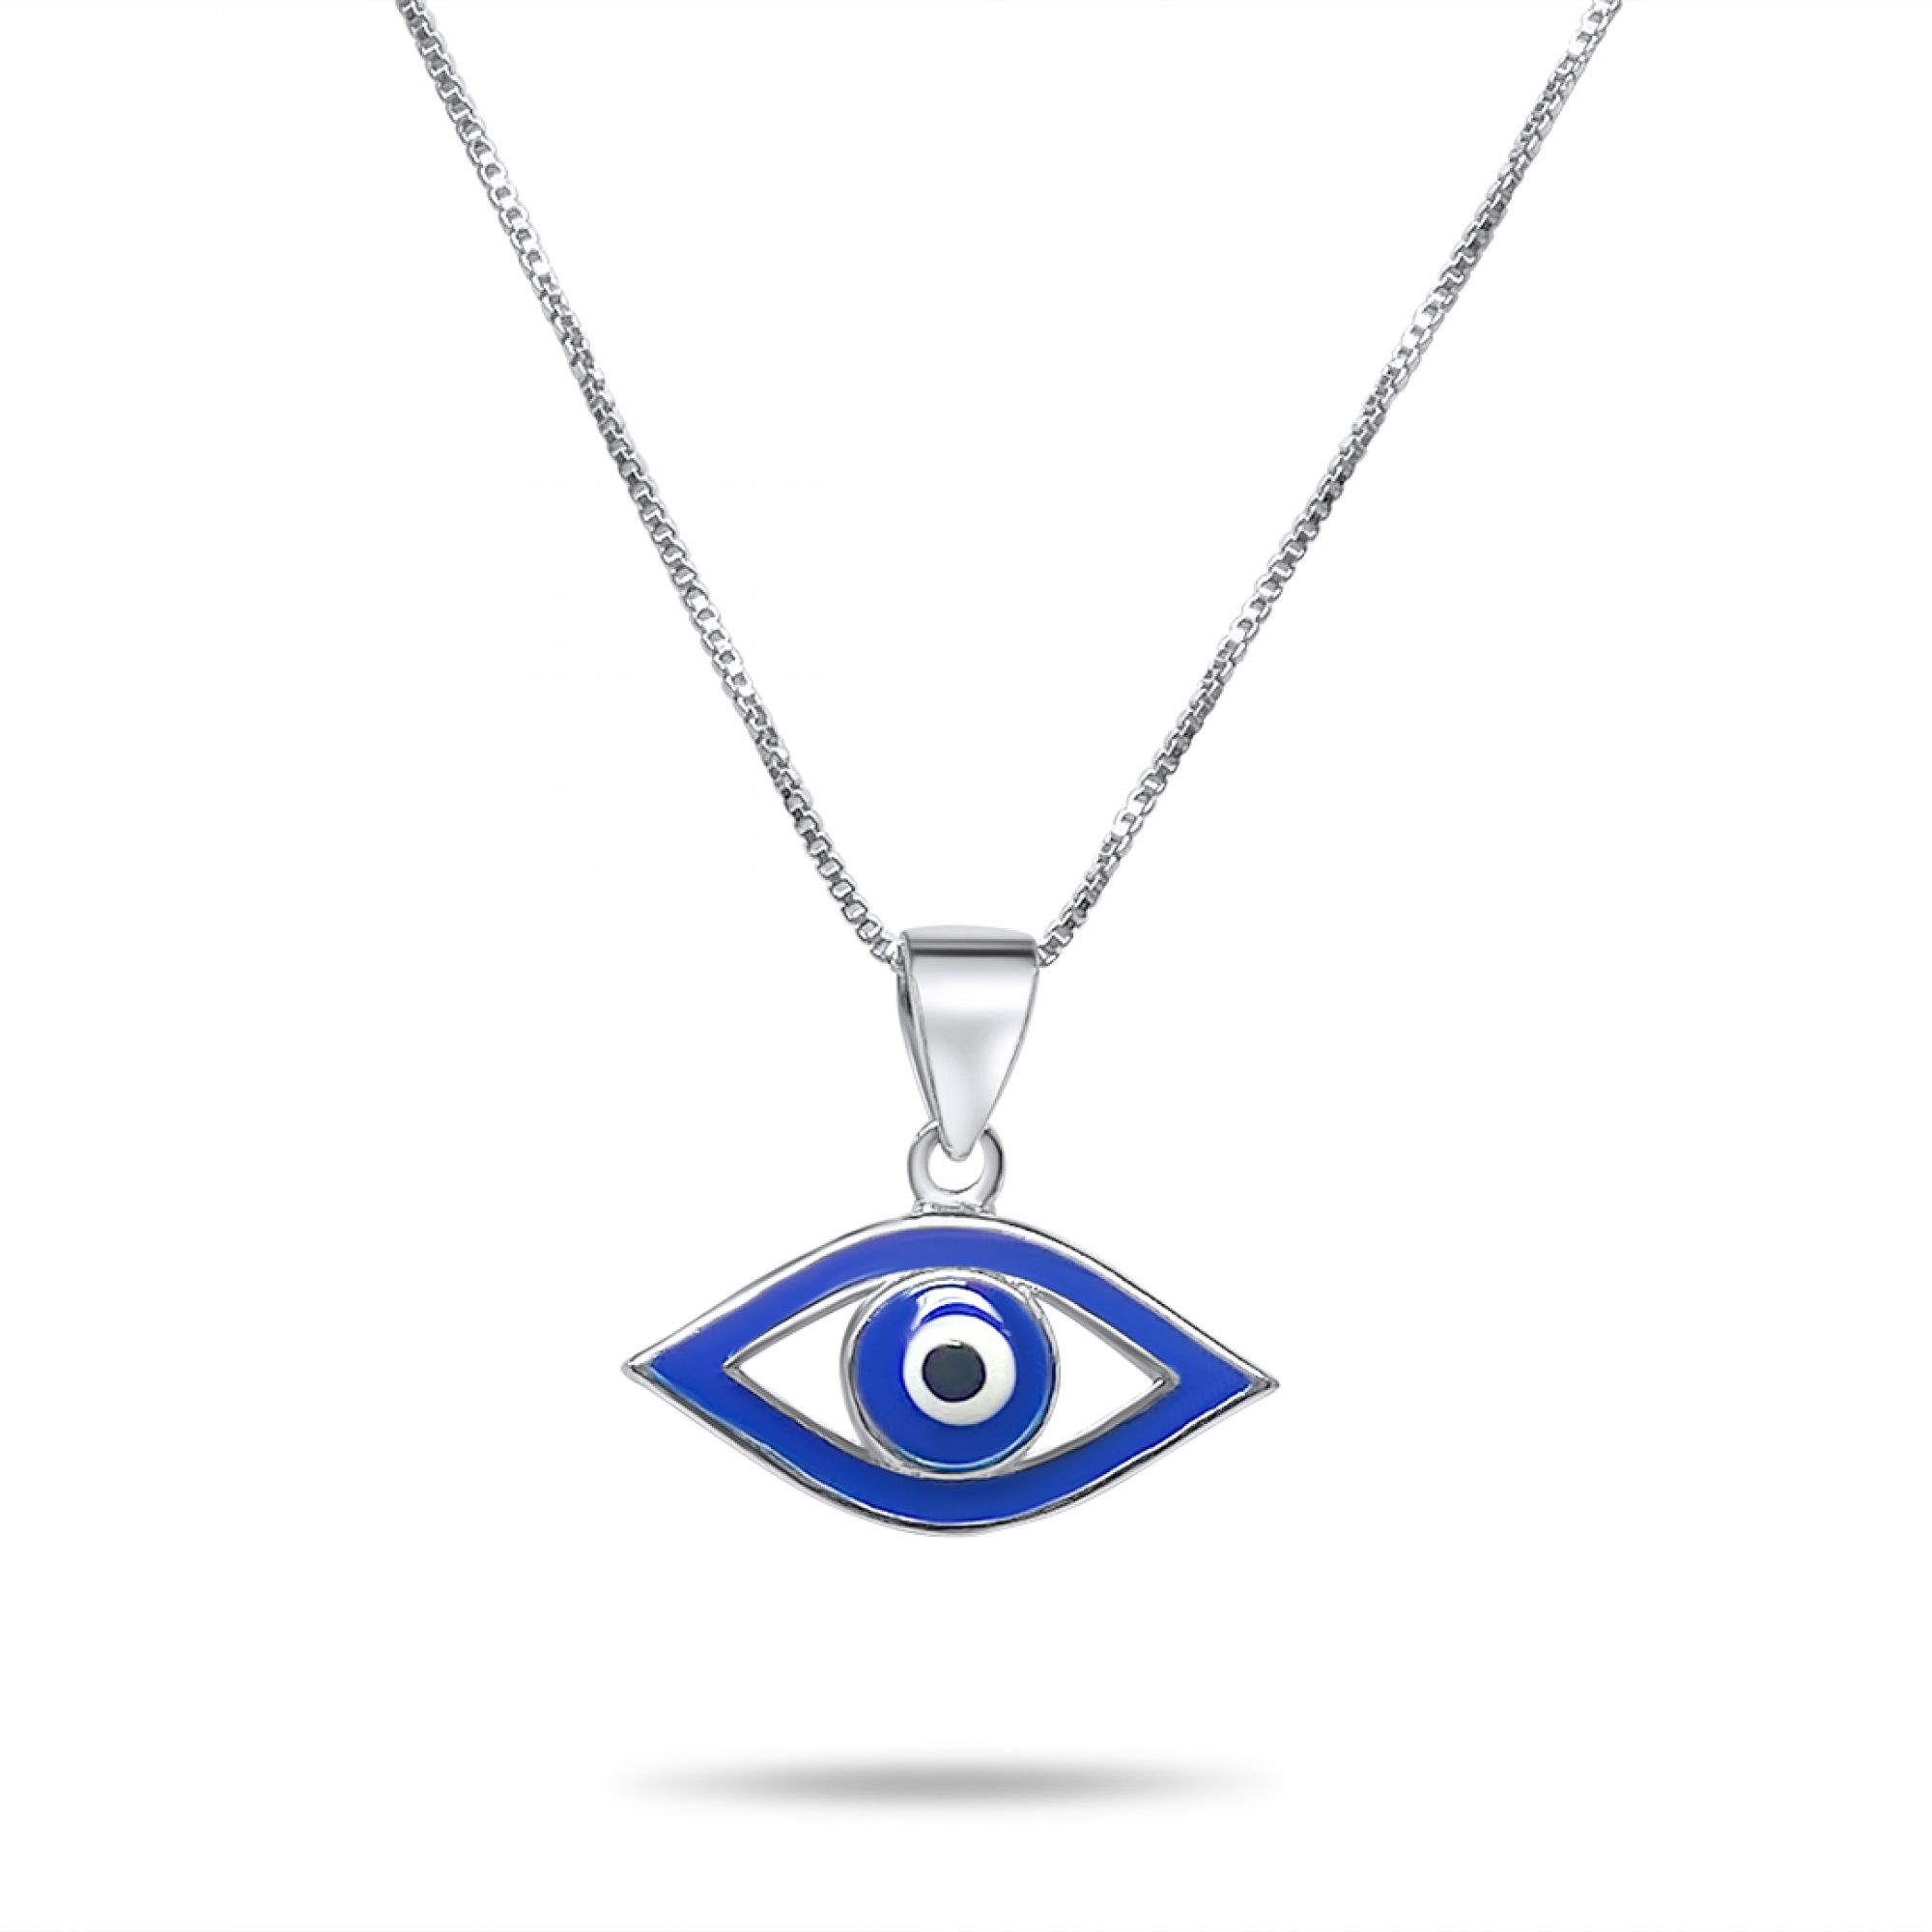 Eye pendant necklace with enamel